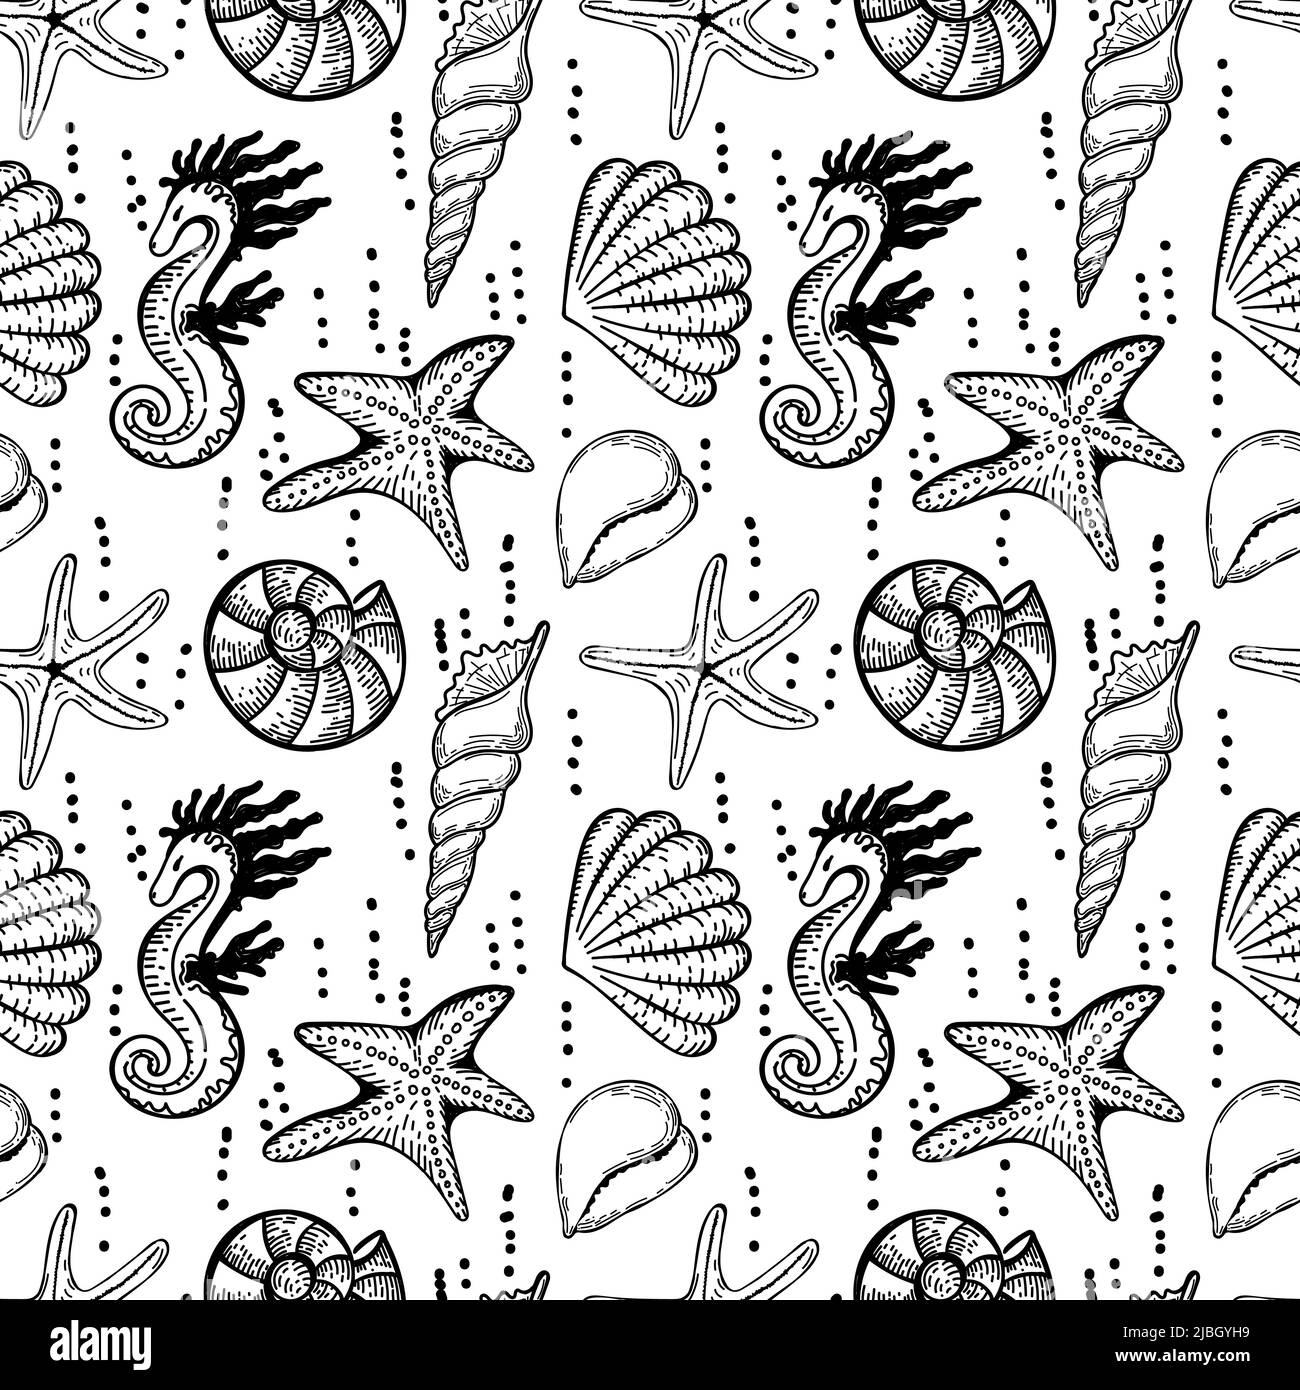 Seashells and starfish Black and White Stock Photos & Images - Alamy